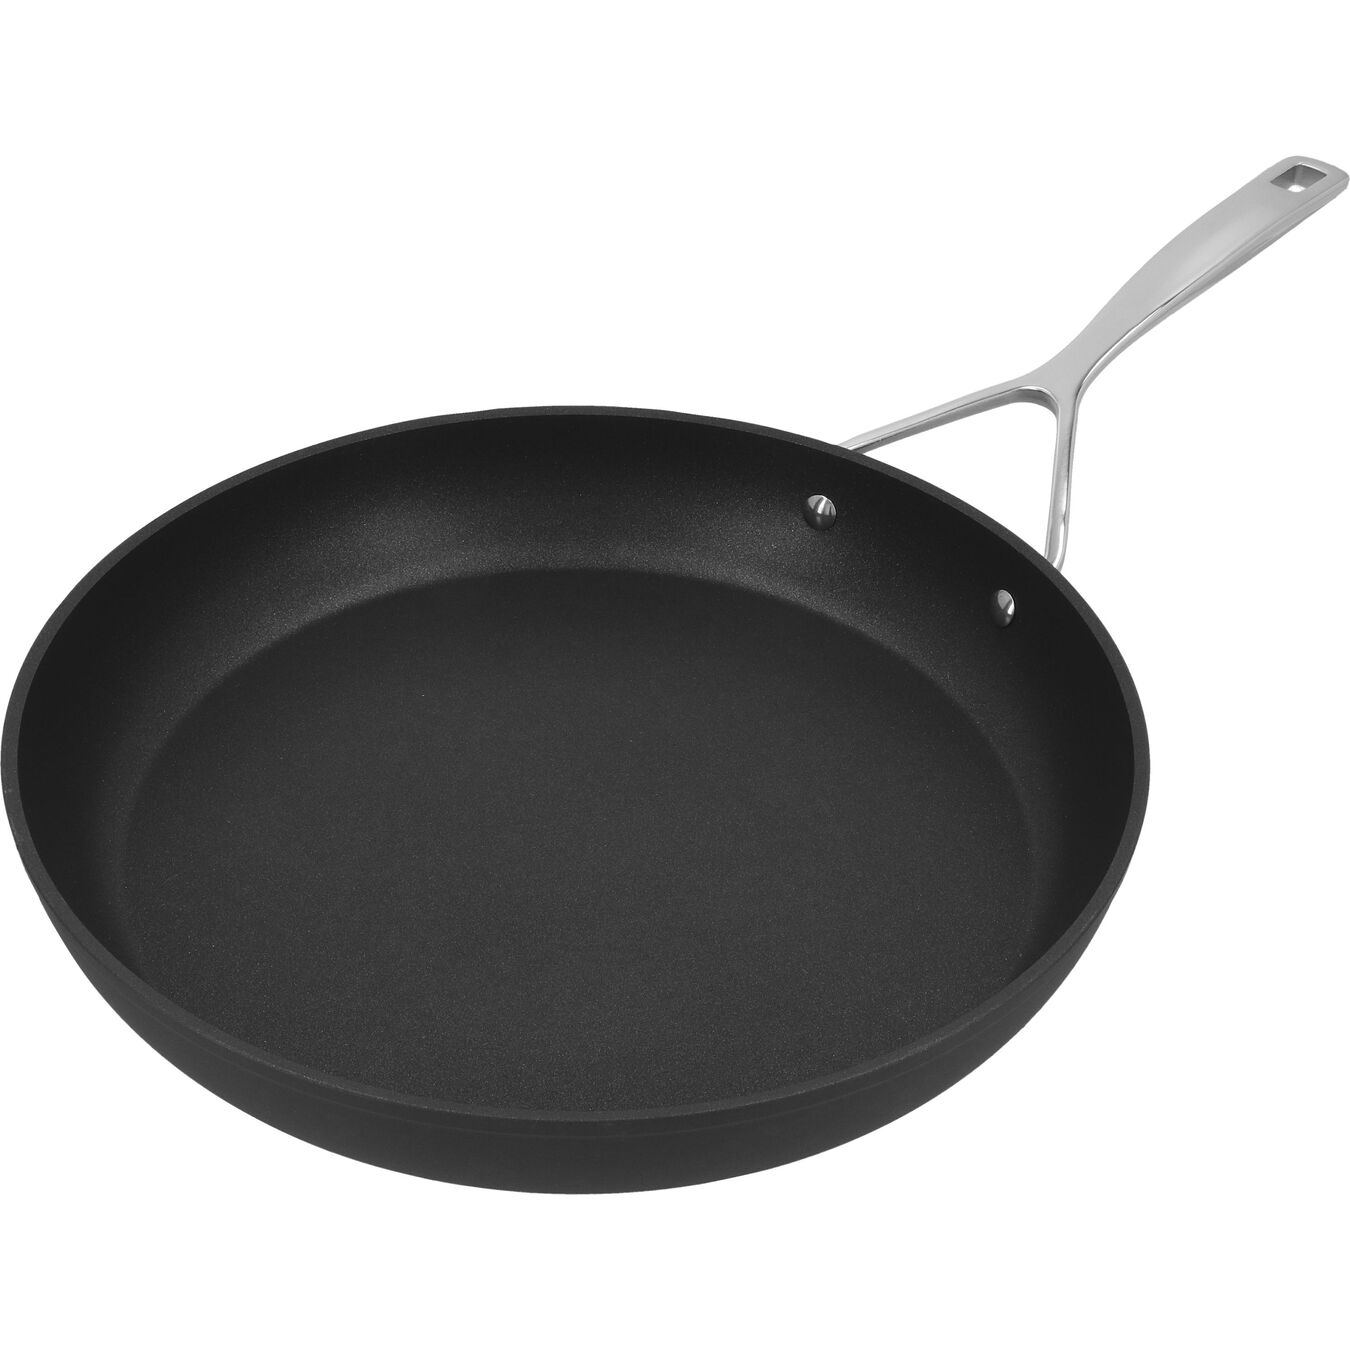 32 cm Aluminum Frying pan silver-black,,large 3